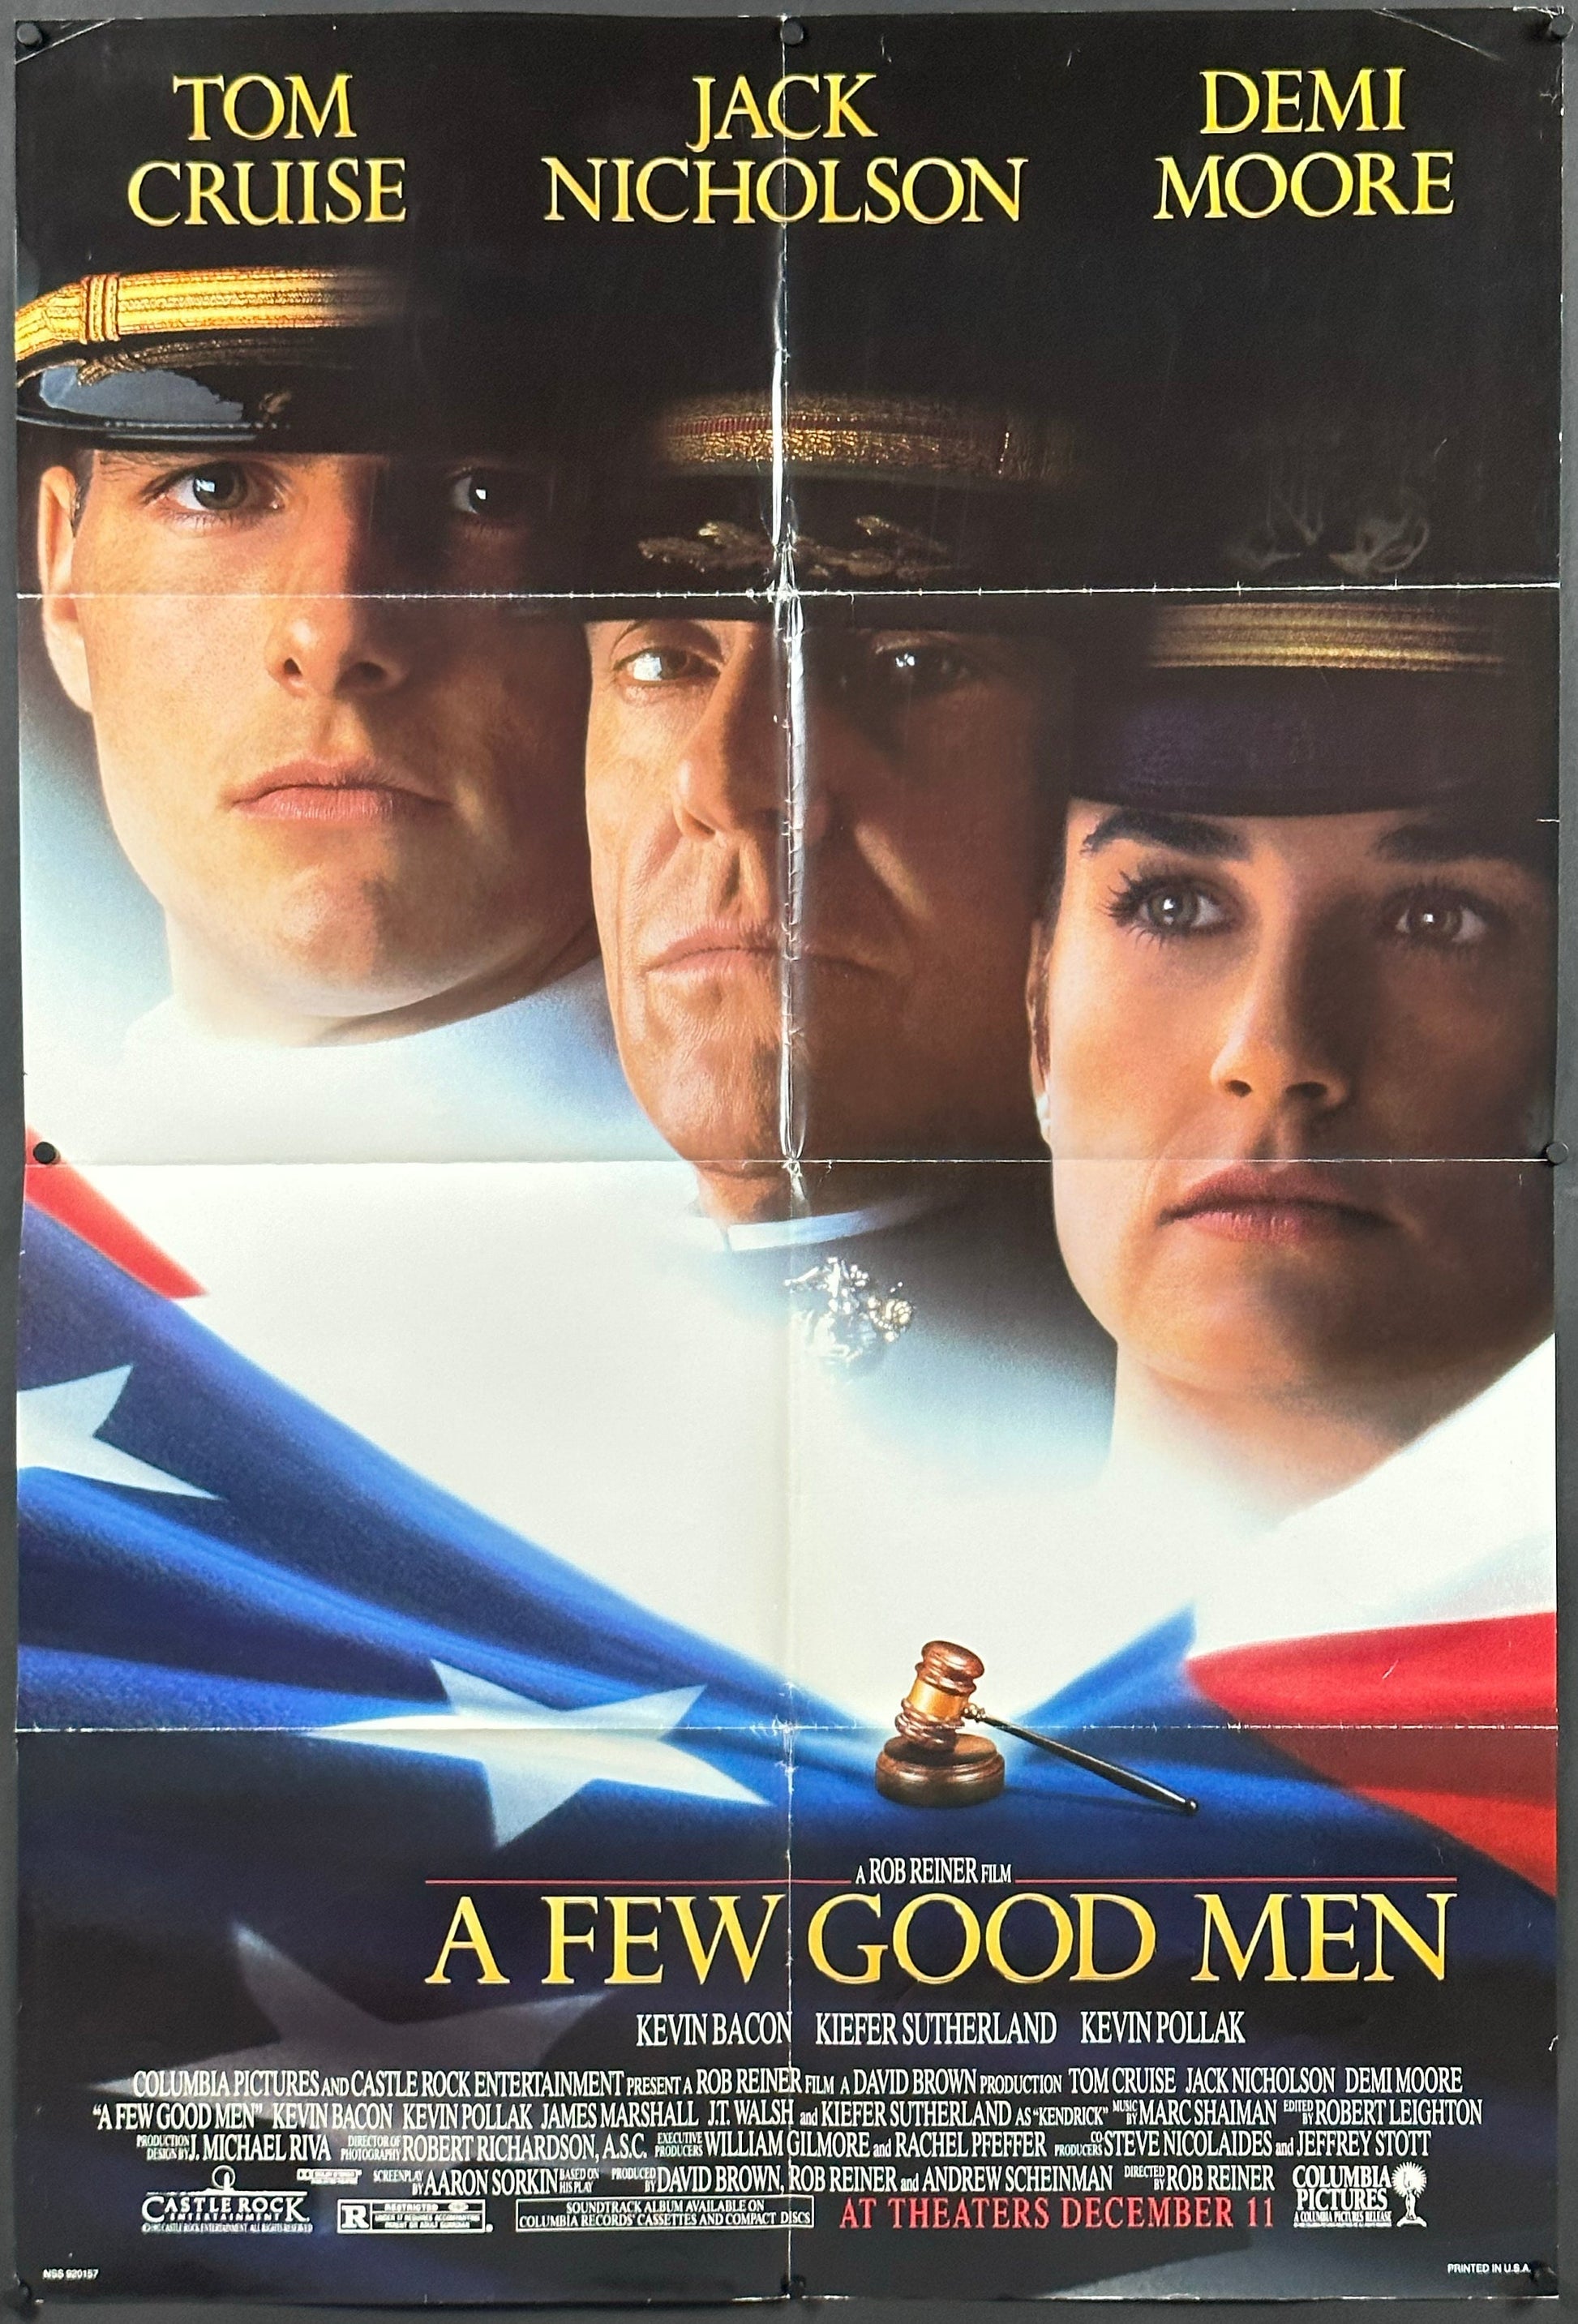 A Few Good Men US One Sheet (1992) - ORIGINAL RELEASE - posterpalace.com